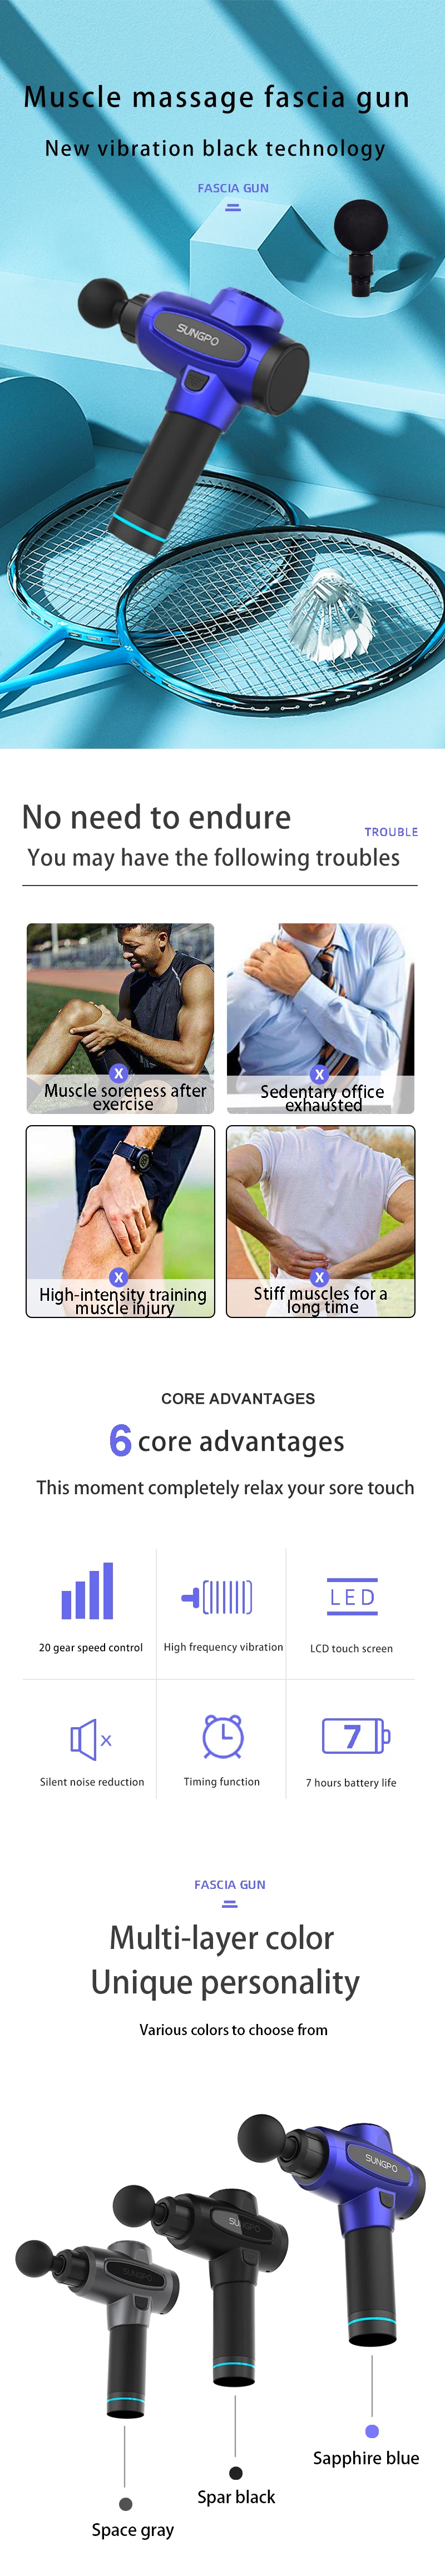 Professional handheld body massager wireless deep tissue muscle vibration massage gun